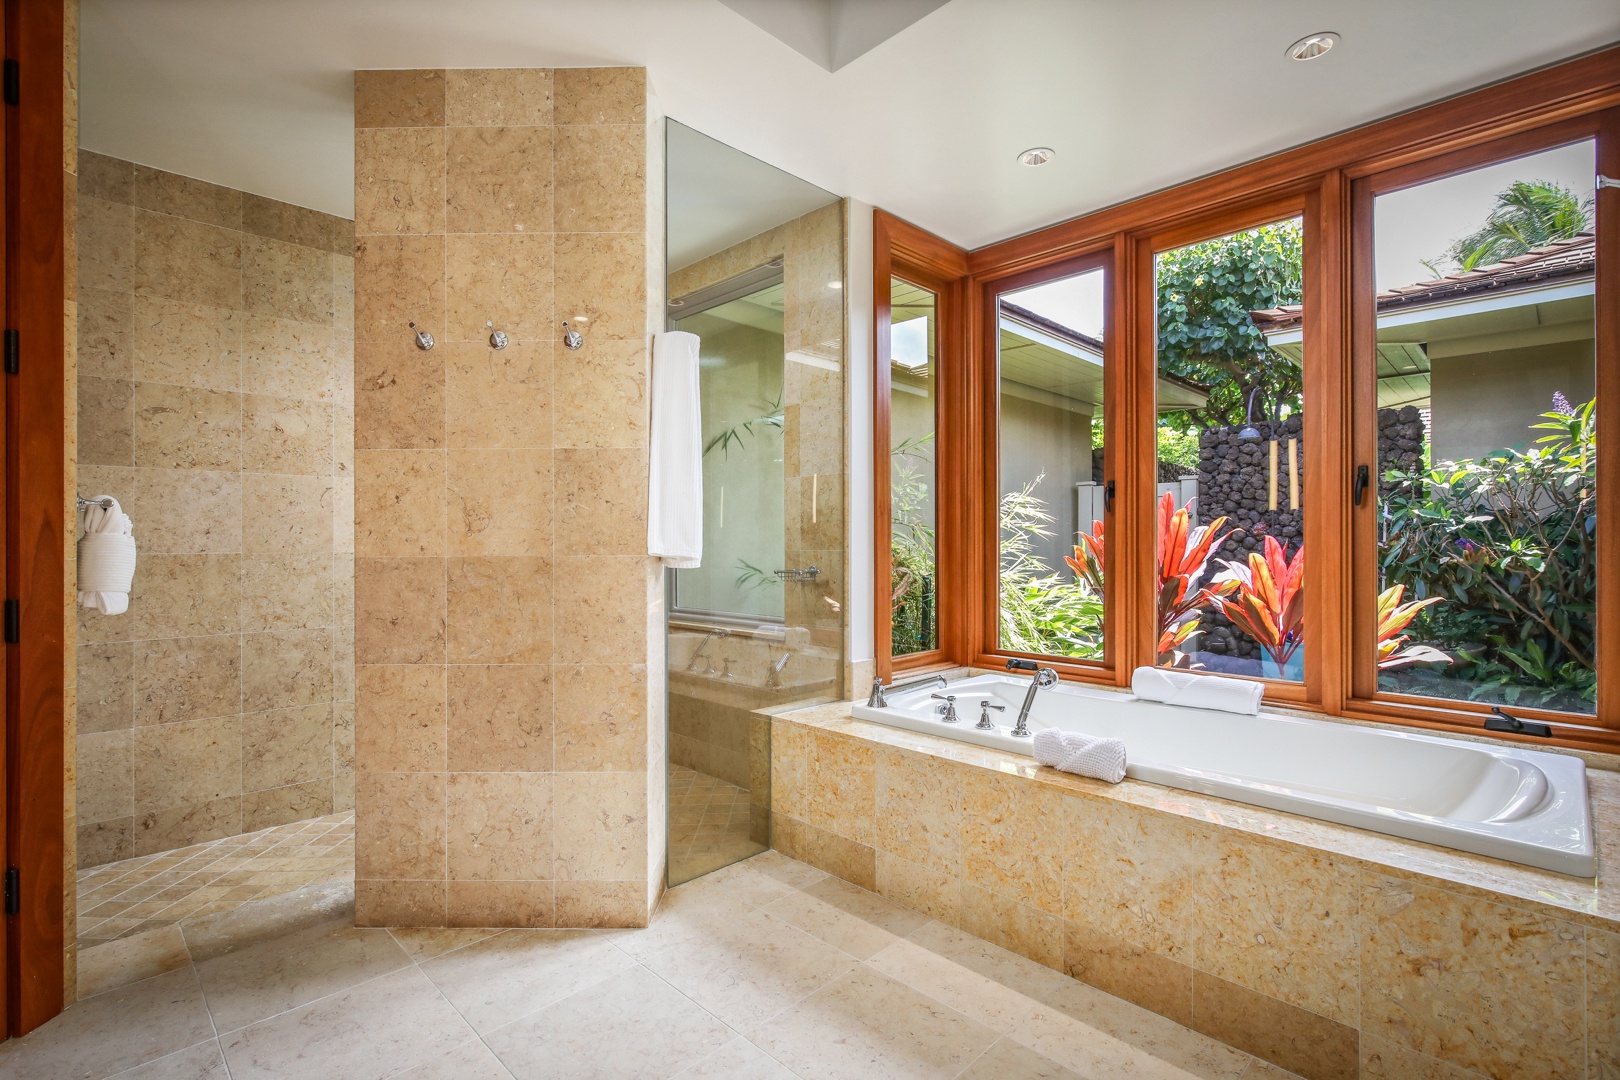 Kailua Kona Vacation Rentals, 4BD Hainoa Estate (122) at Four Seasons Resort at Hualalai - Primary suite shower and tub.